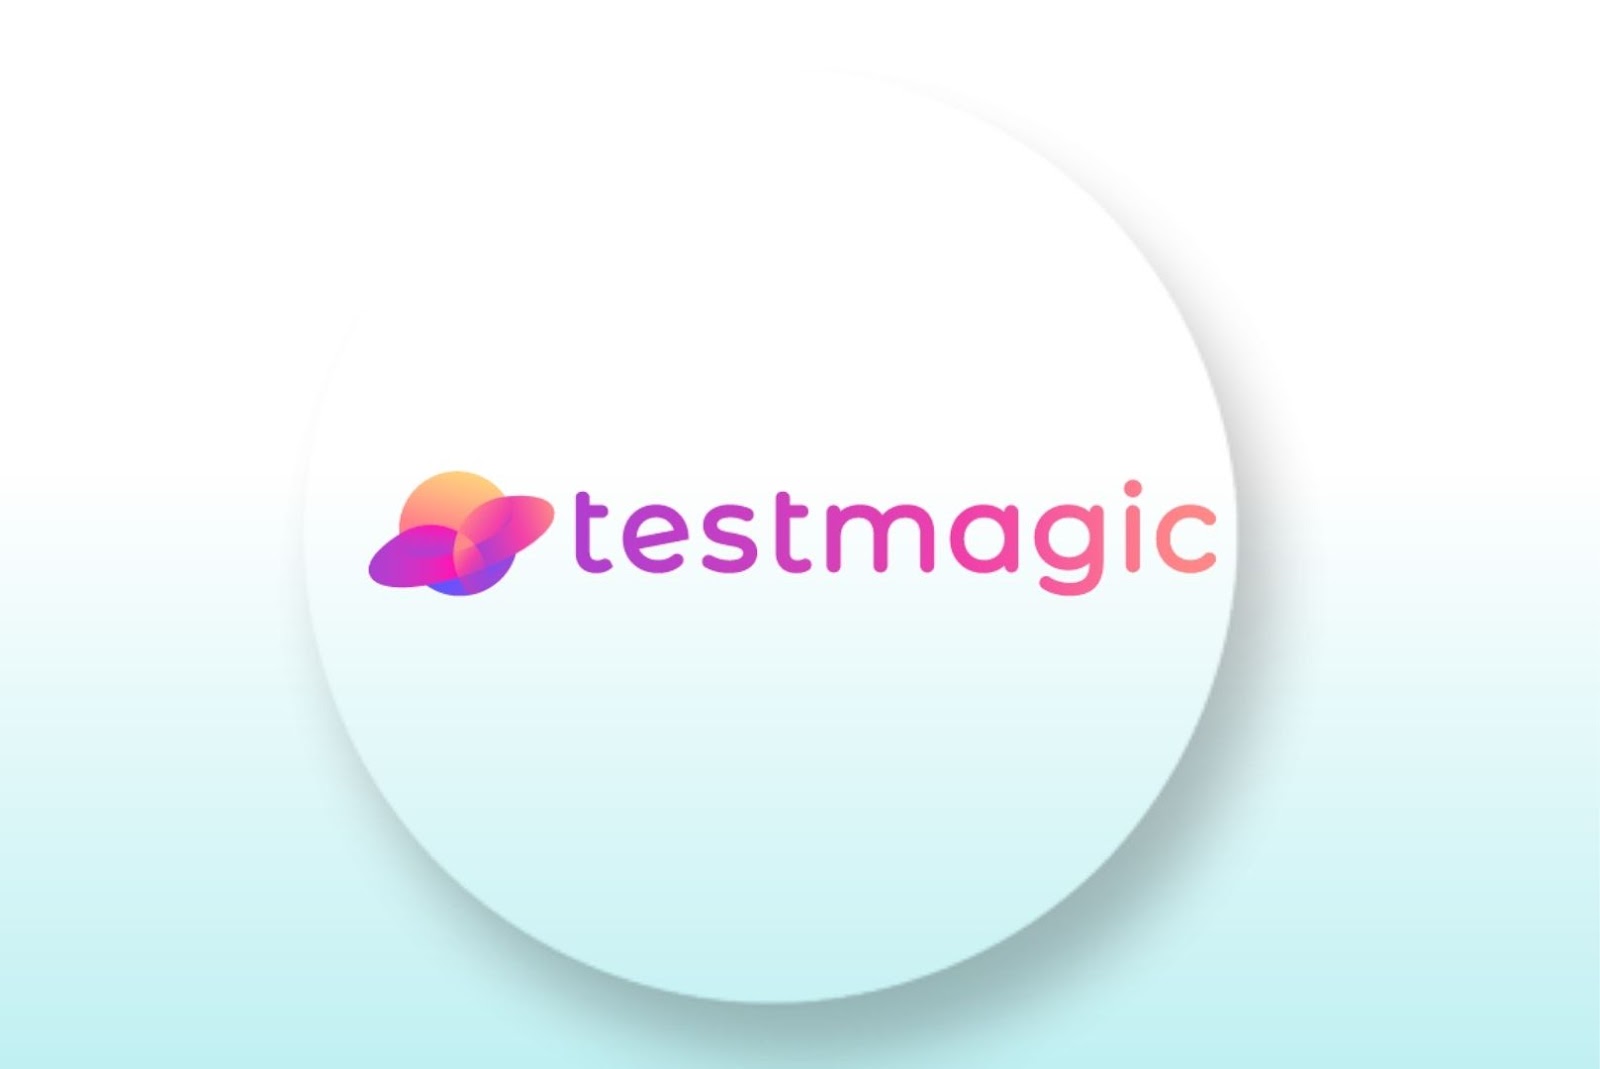 Test magic flutter app development tools